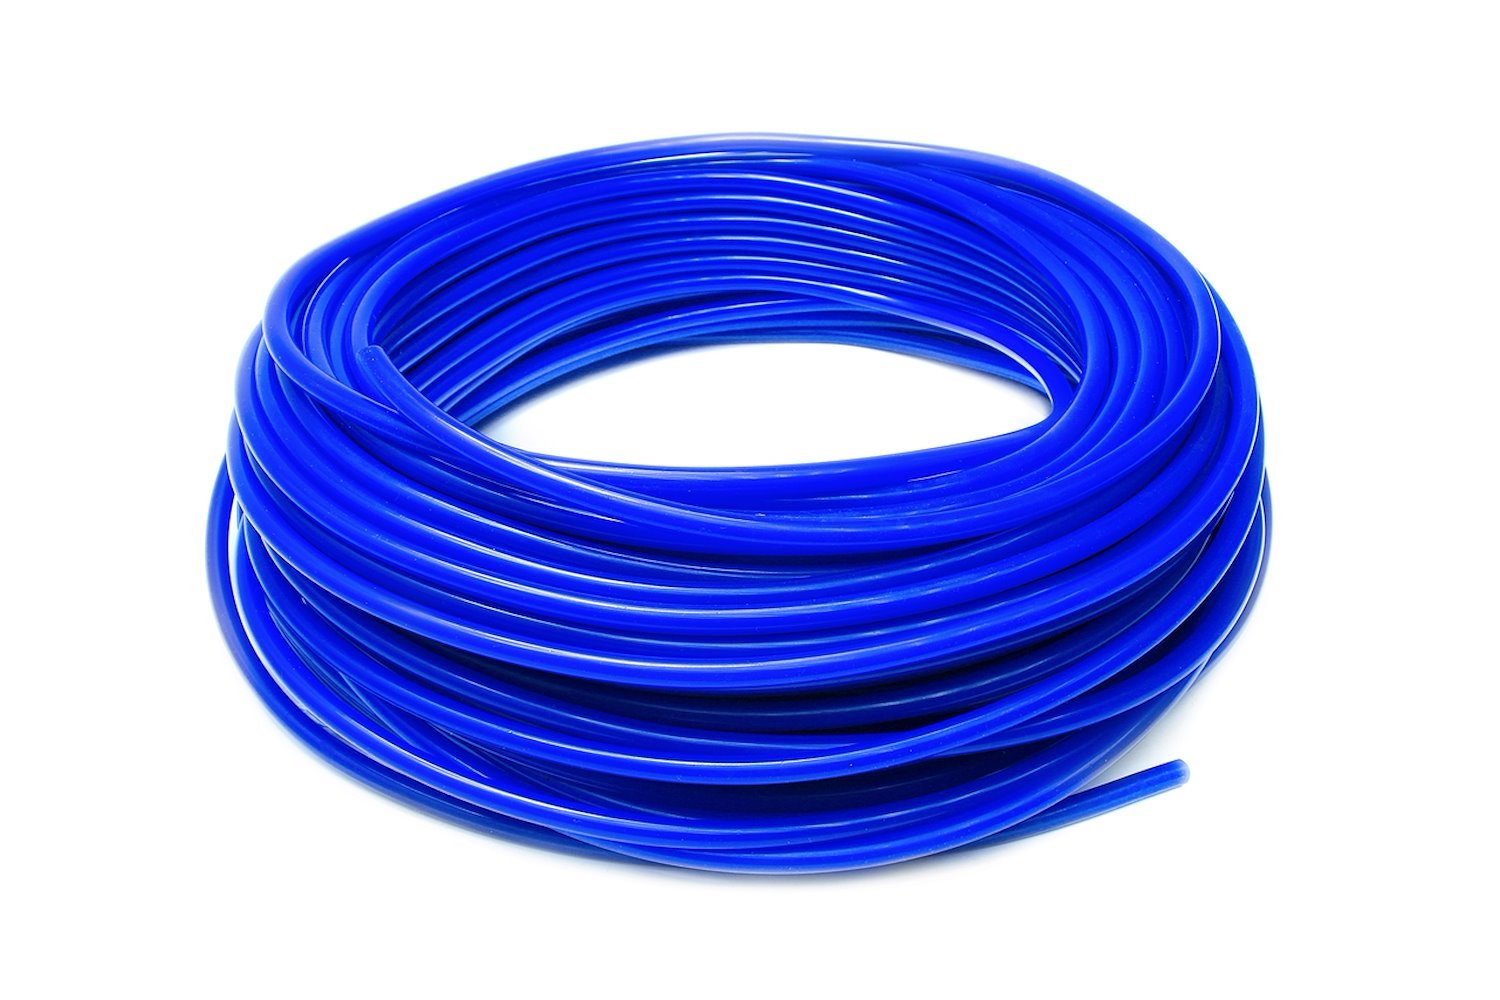 HTSVH3-BLUEx100 High-Temperature Silicone Vacuum Hose Tubing, 1/8 in. ID, 100 ft. Roll, Blue